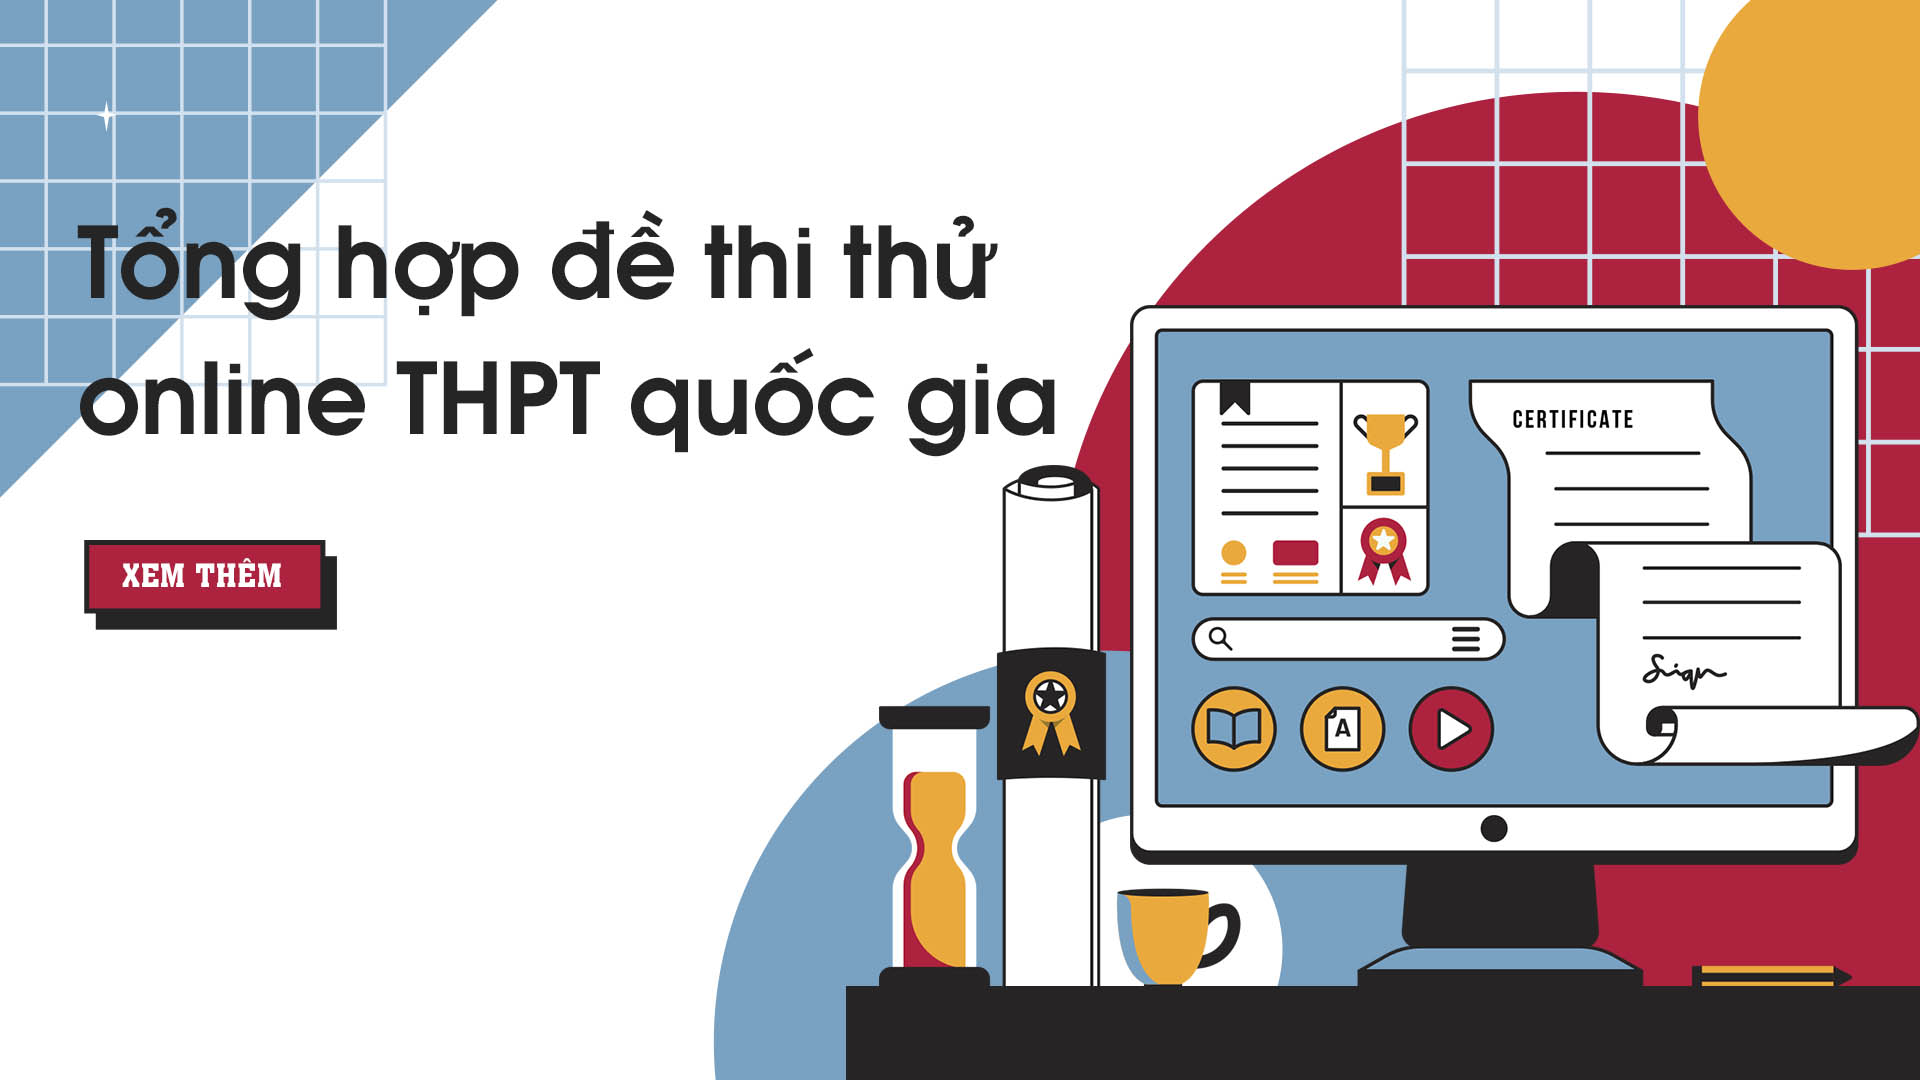 thi thử online THPT quốc gia